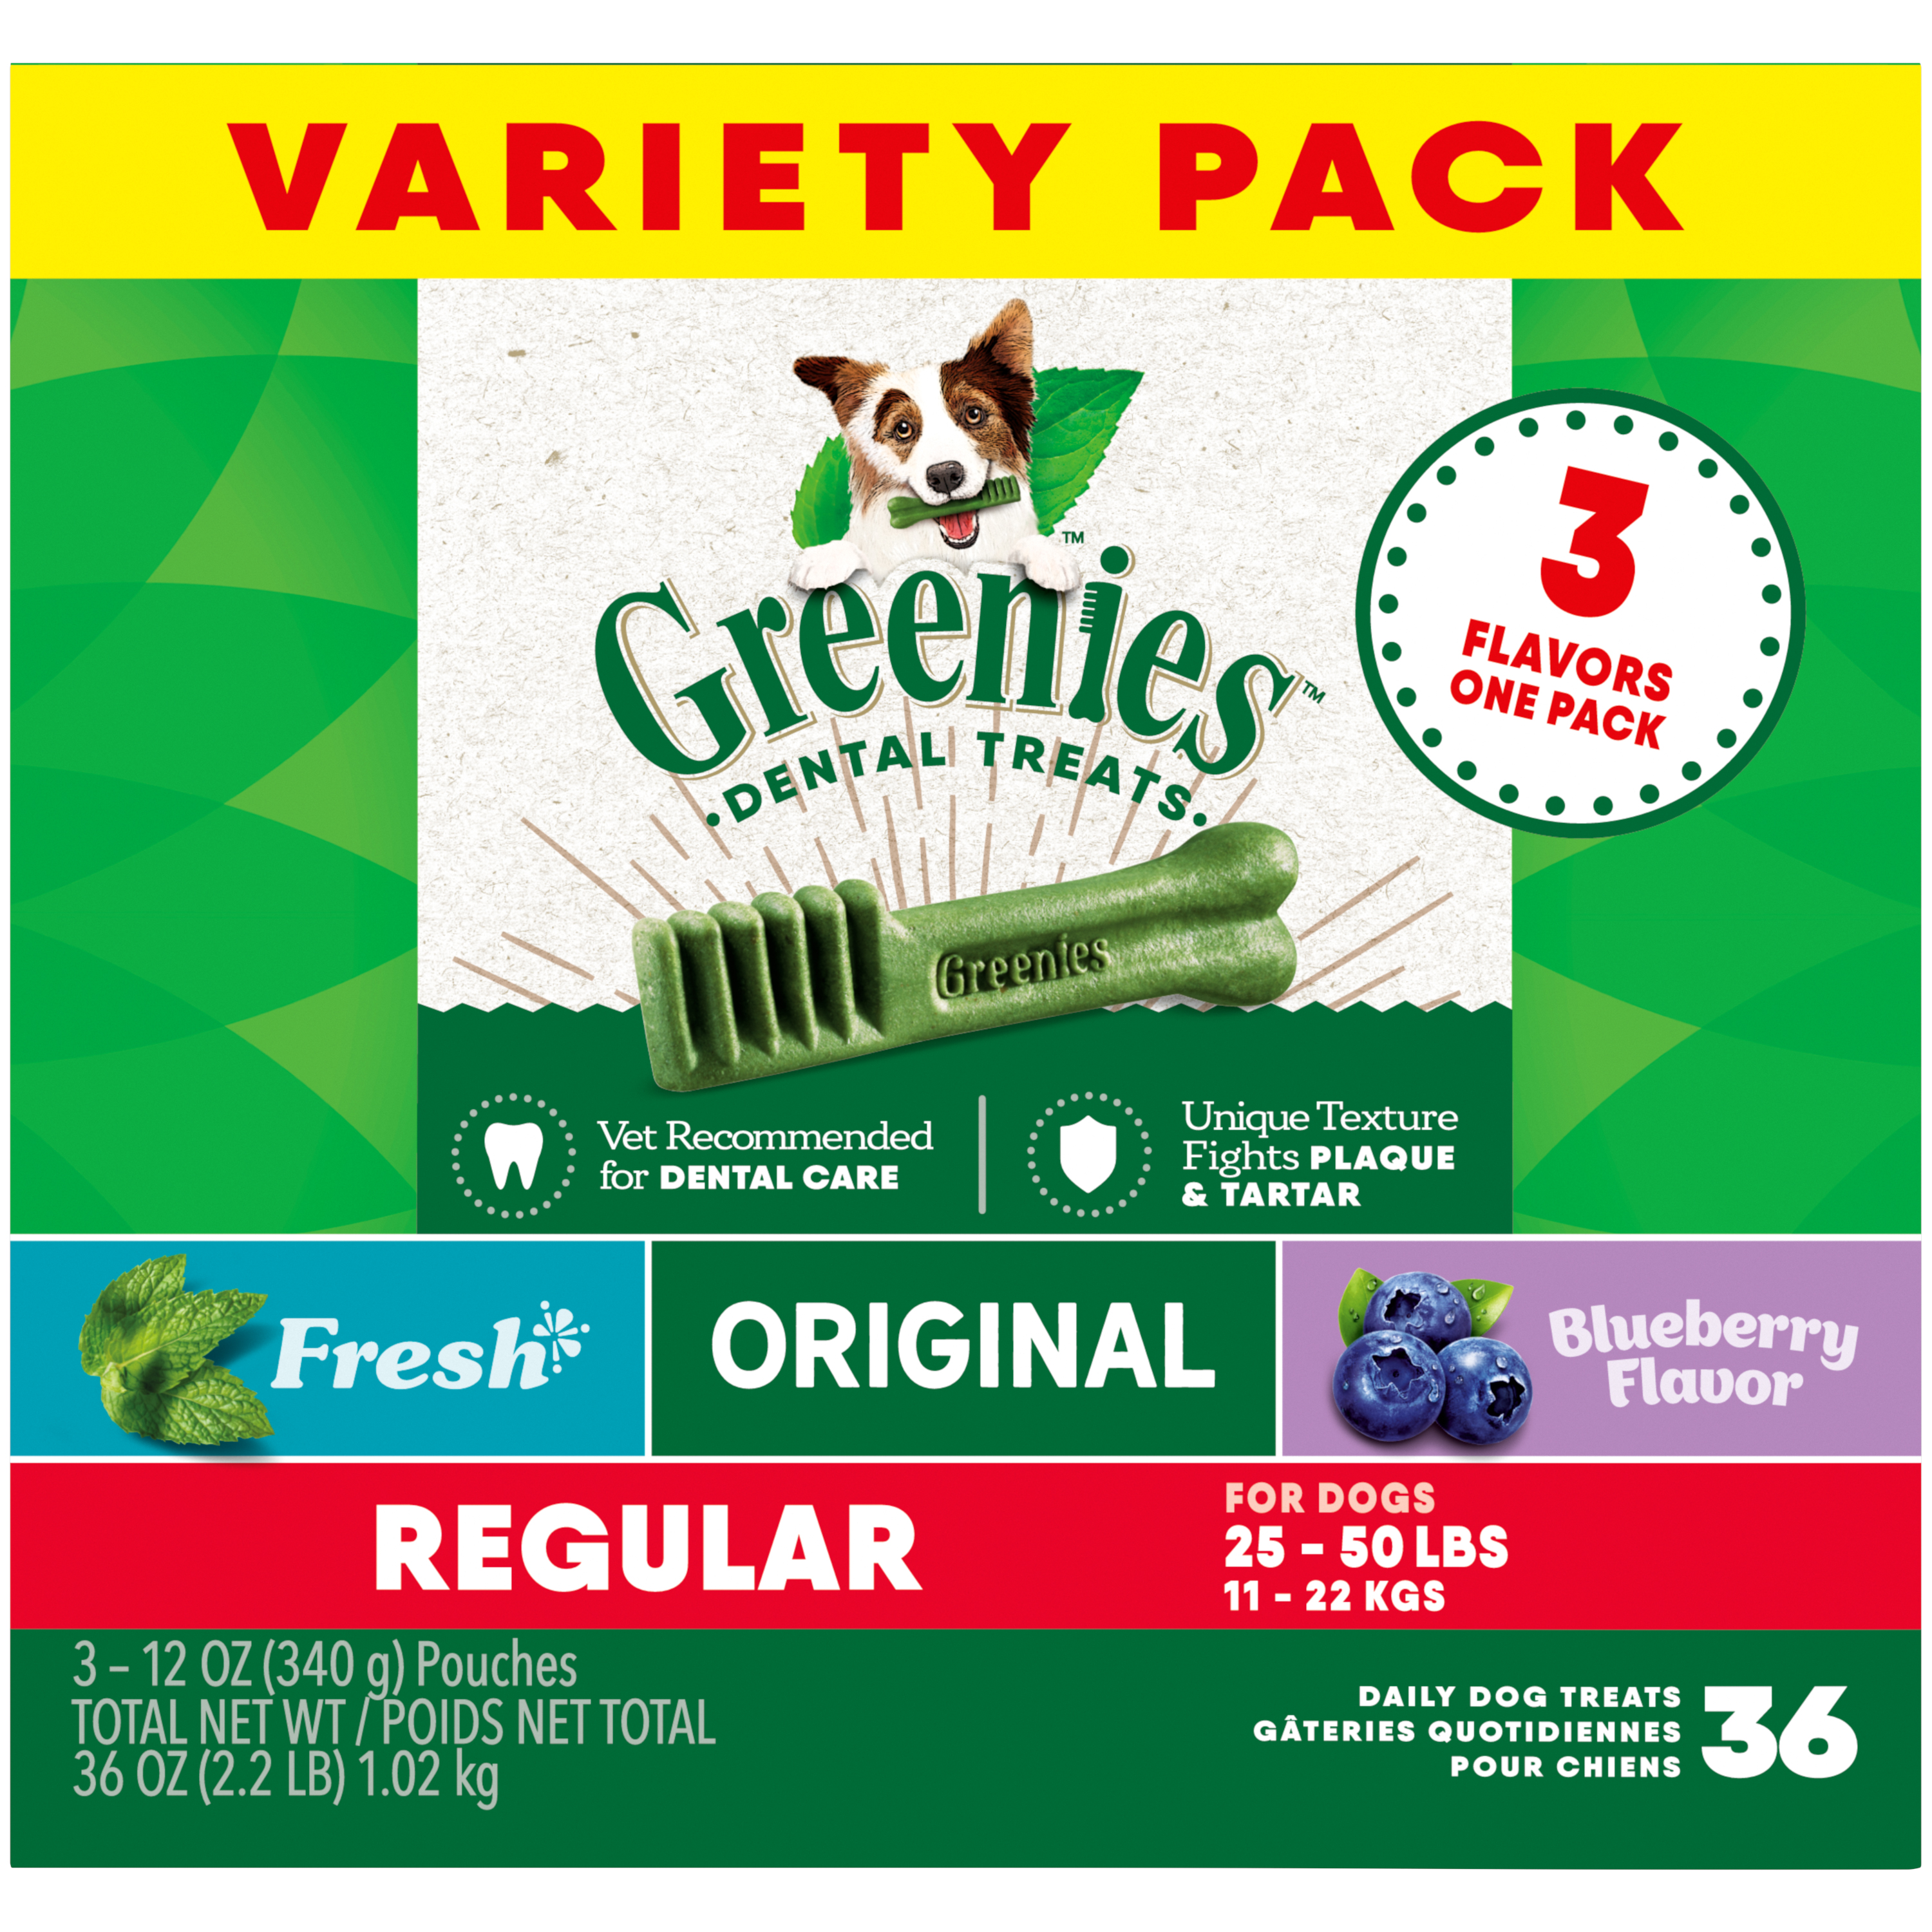 36oz Greenies Regular 3 Flavor Variety pack Value Tub - Health/First Aid